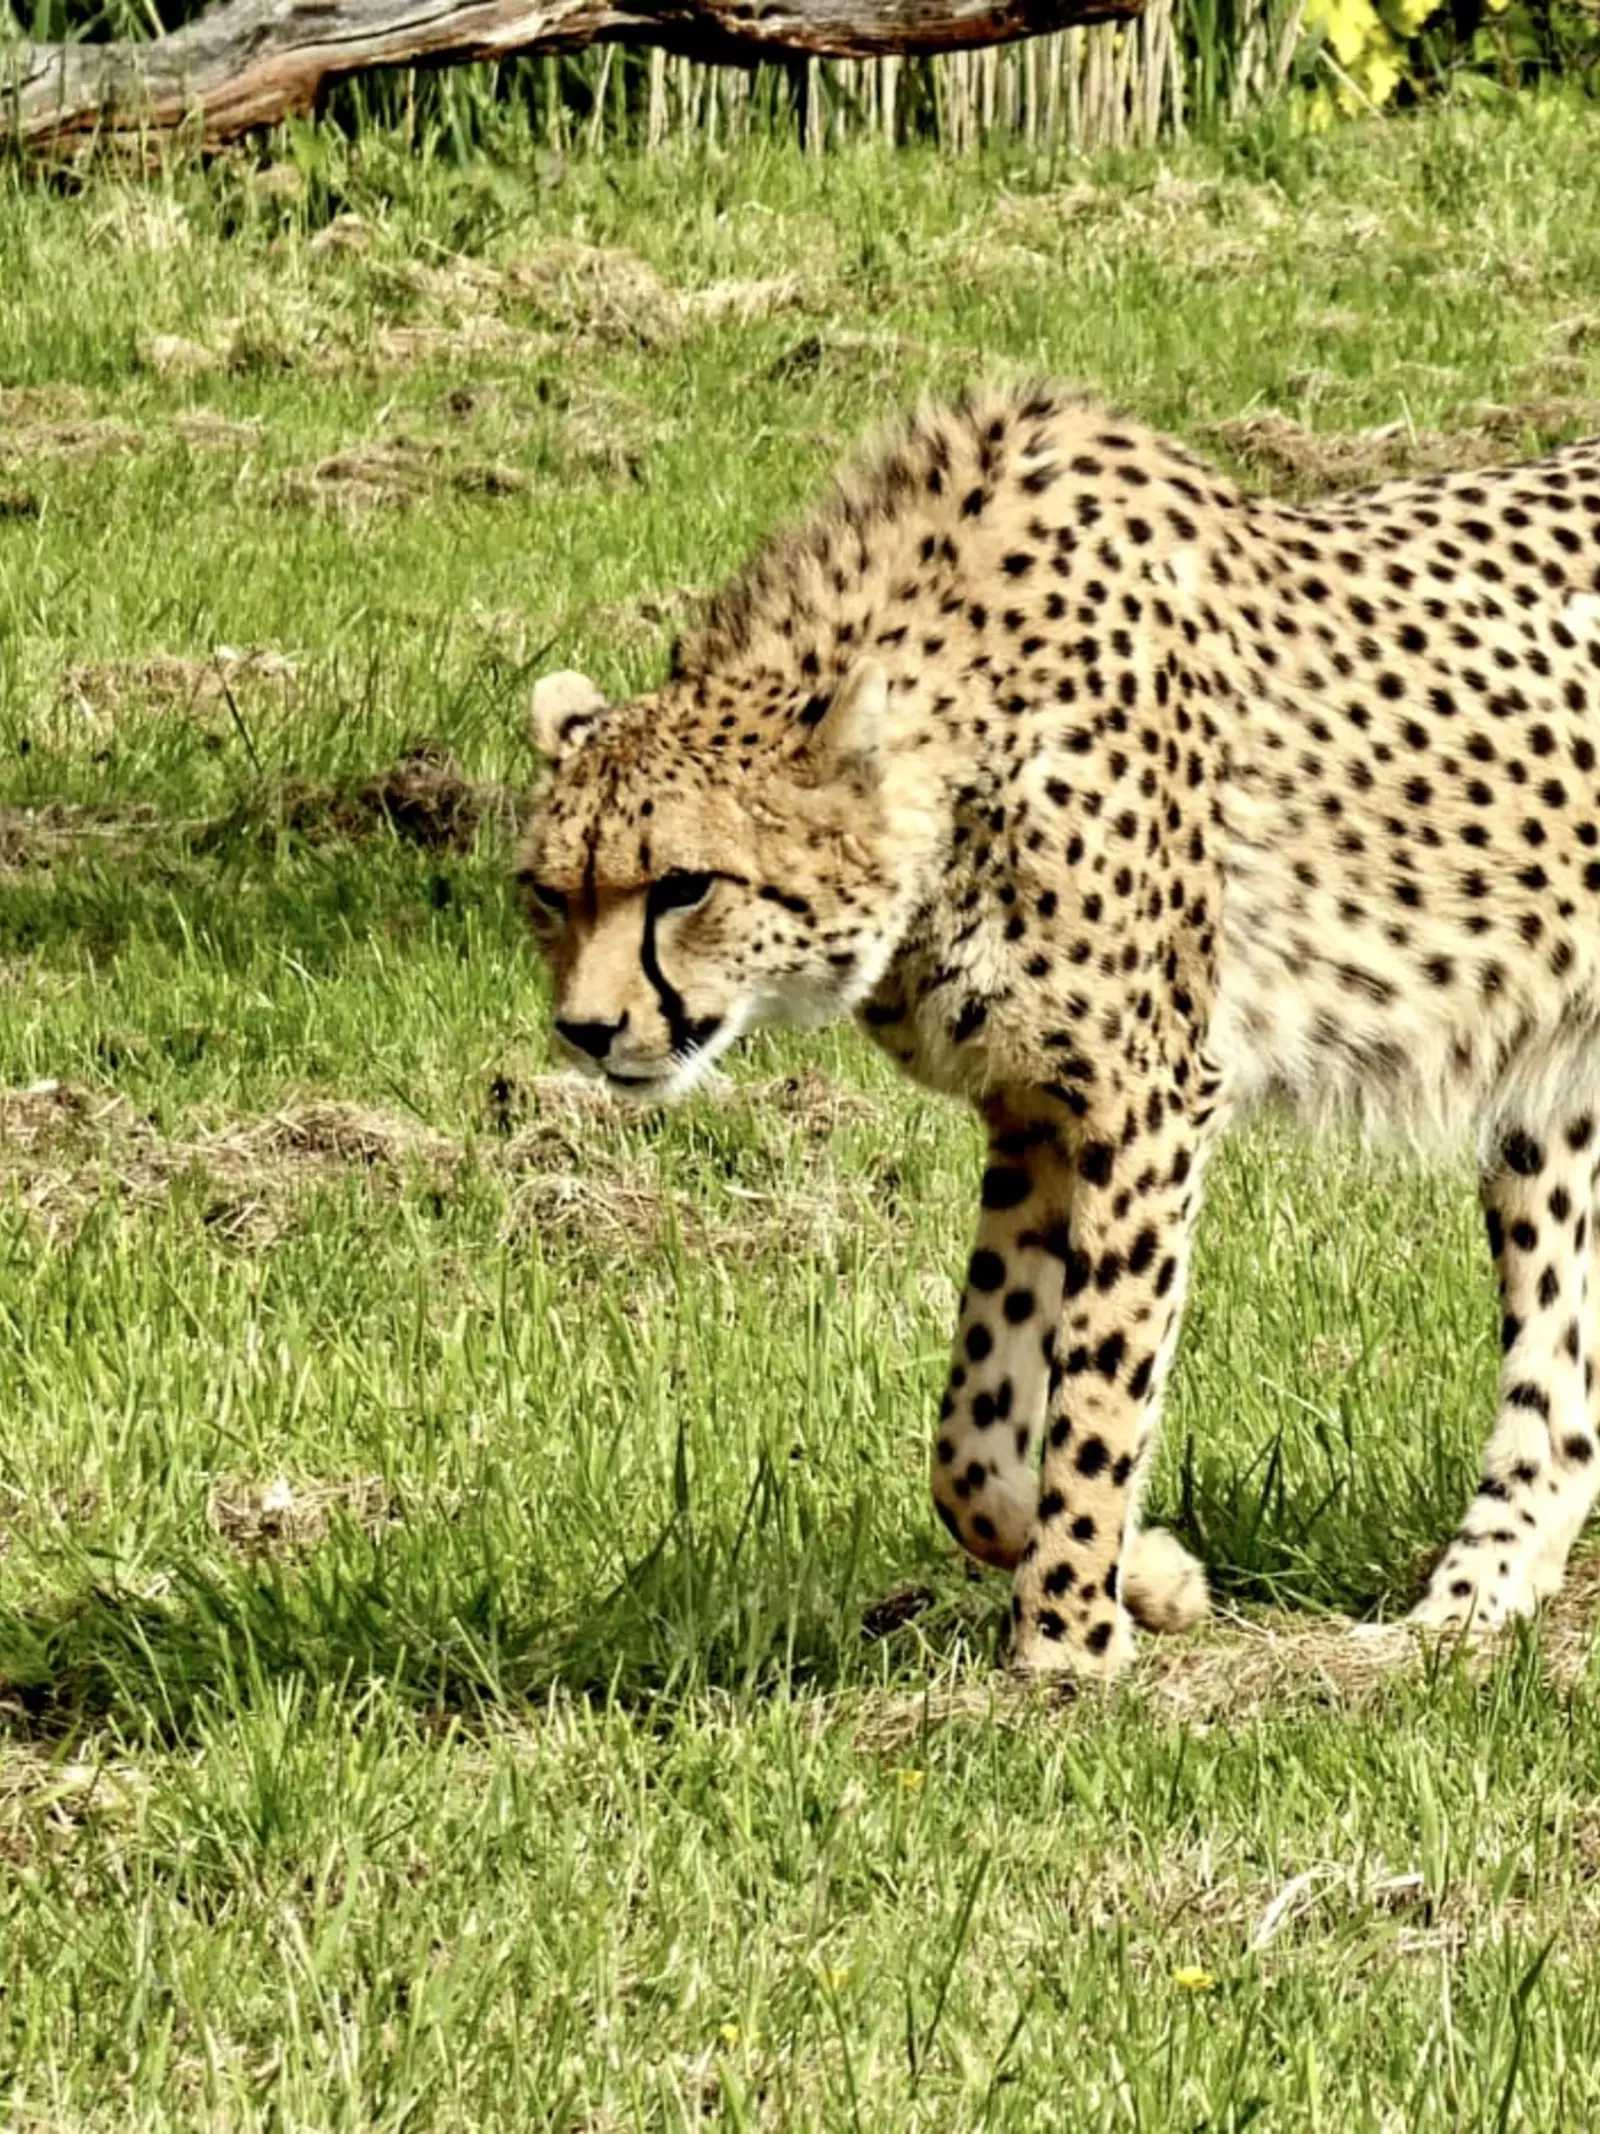 A cheetah walking on short grass at Whipsnade Zoo